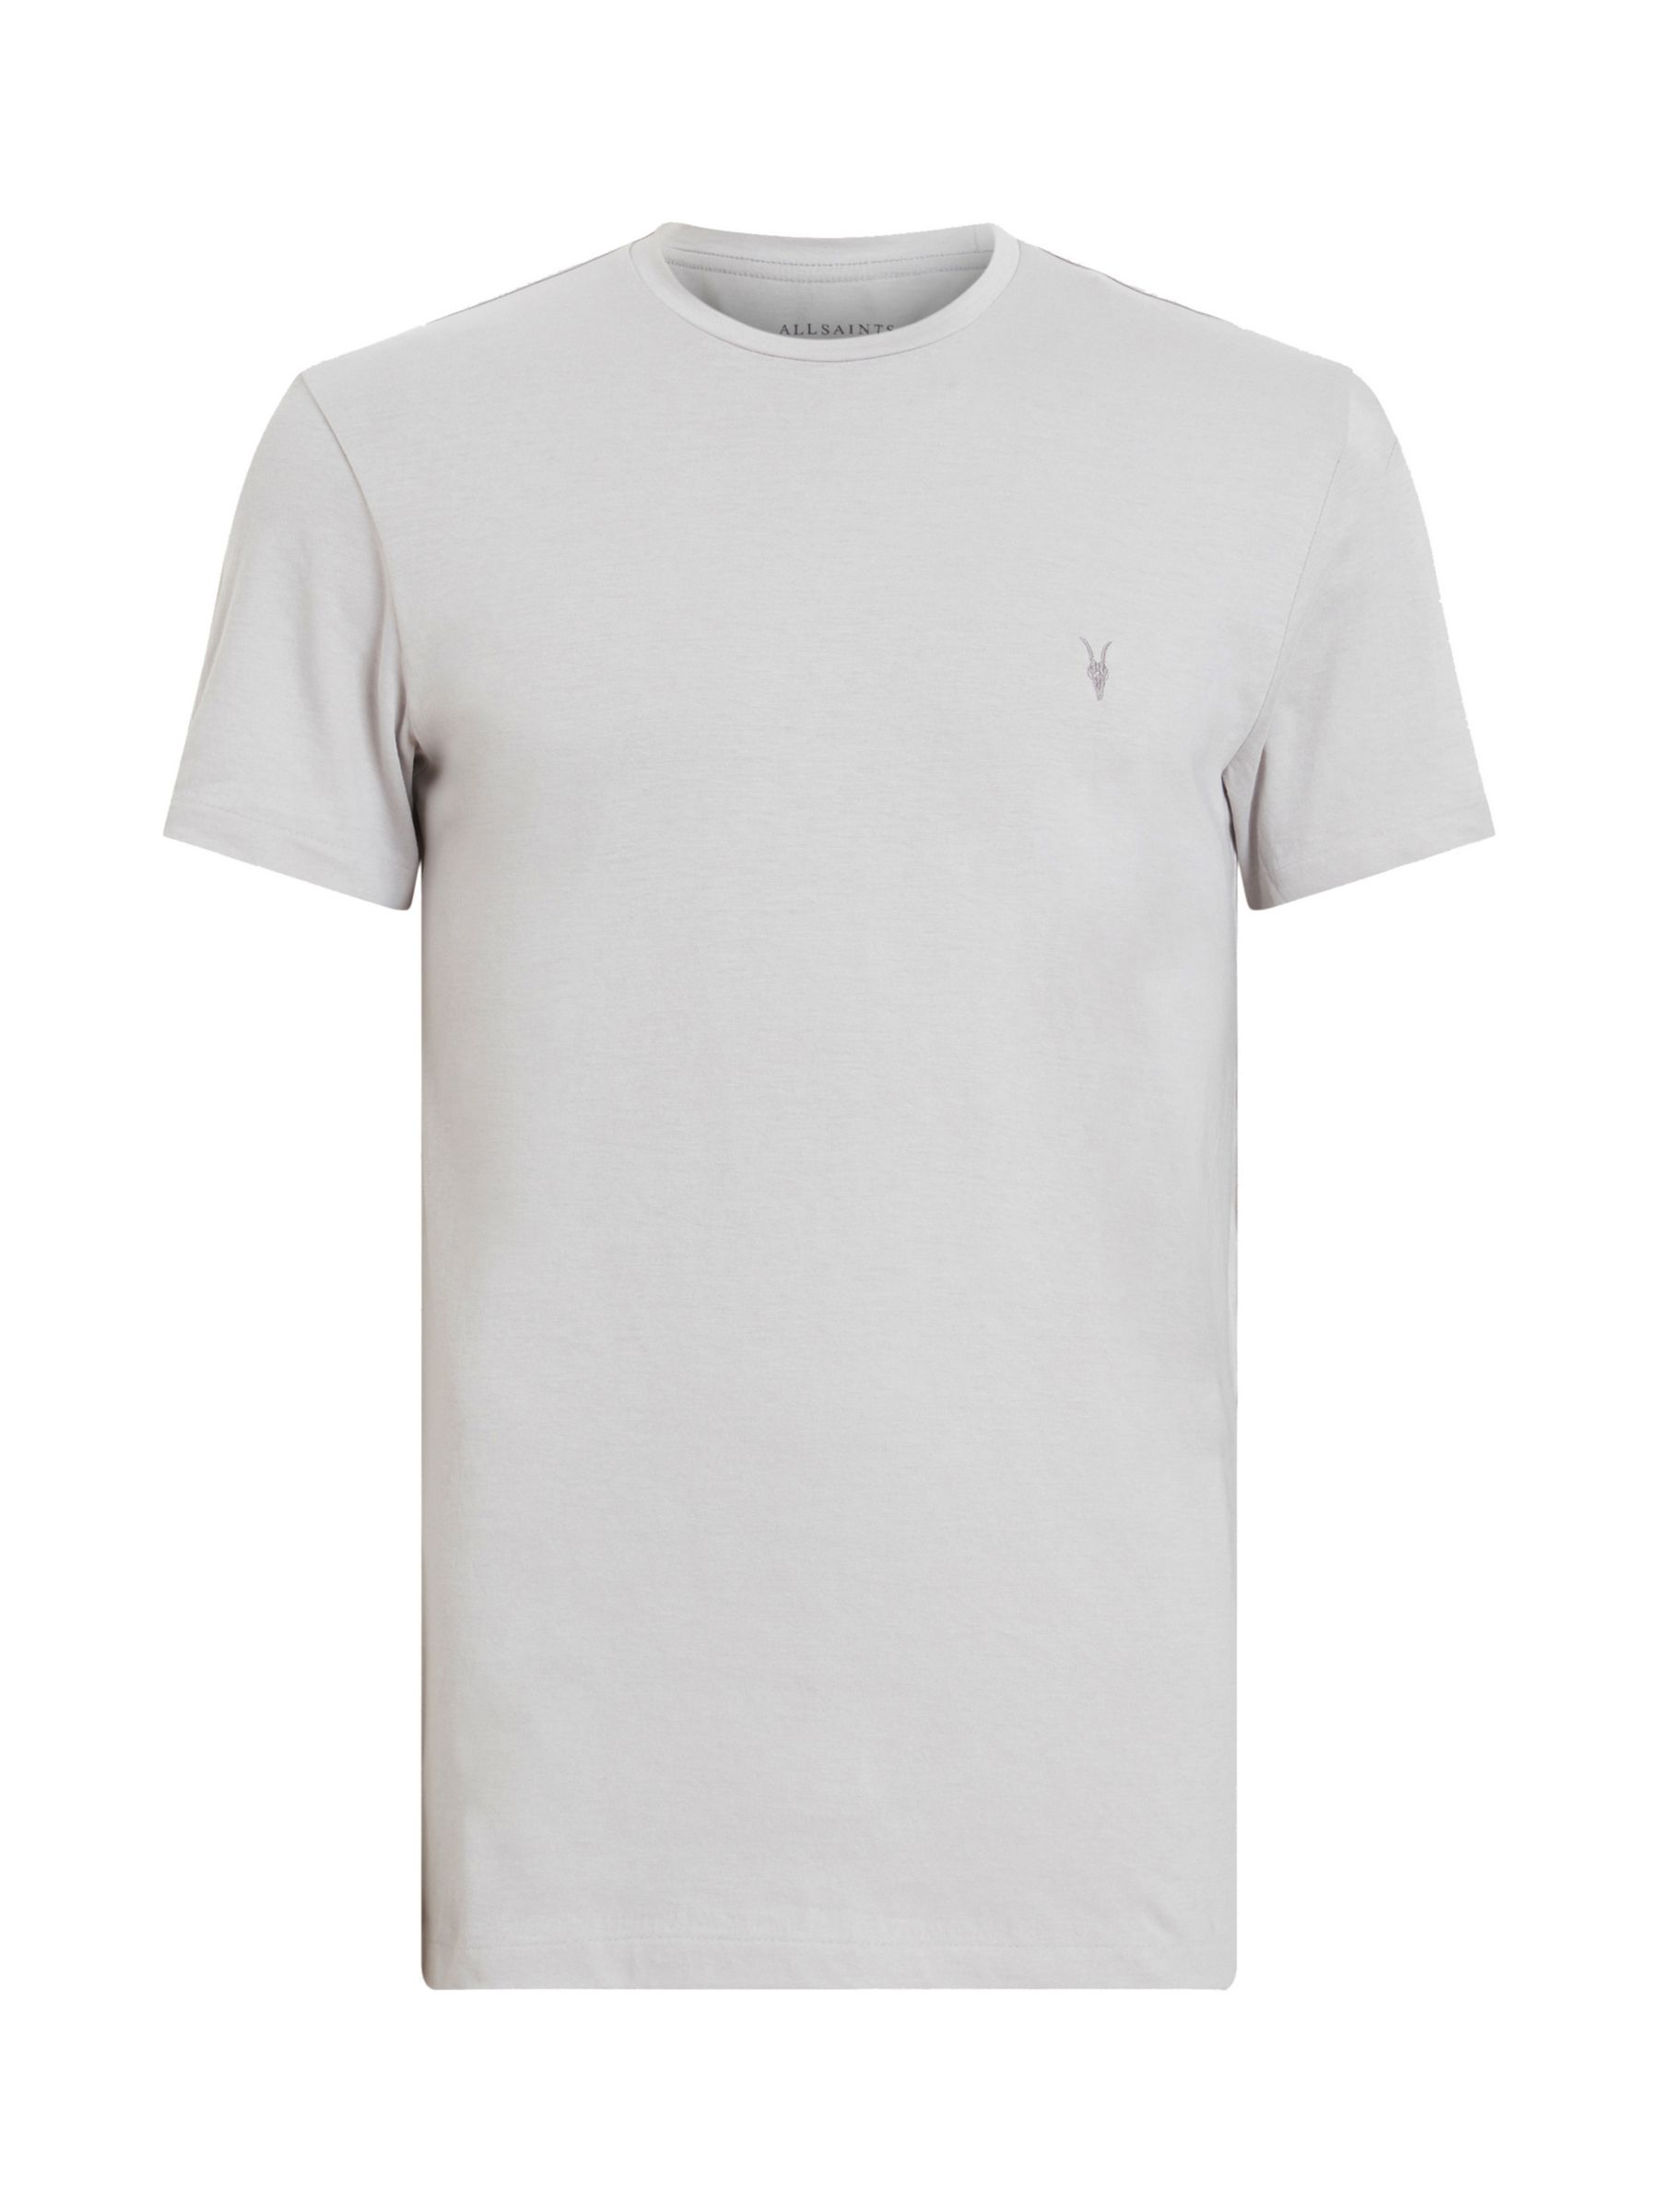 AllSaints Tonic Crew Neck T-Shirt, Smokey Grey, L